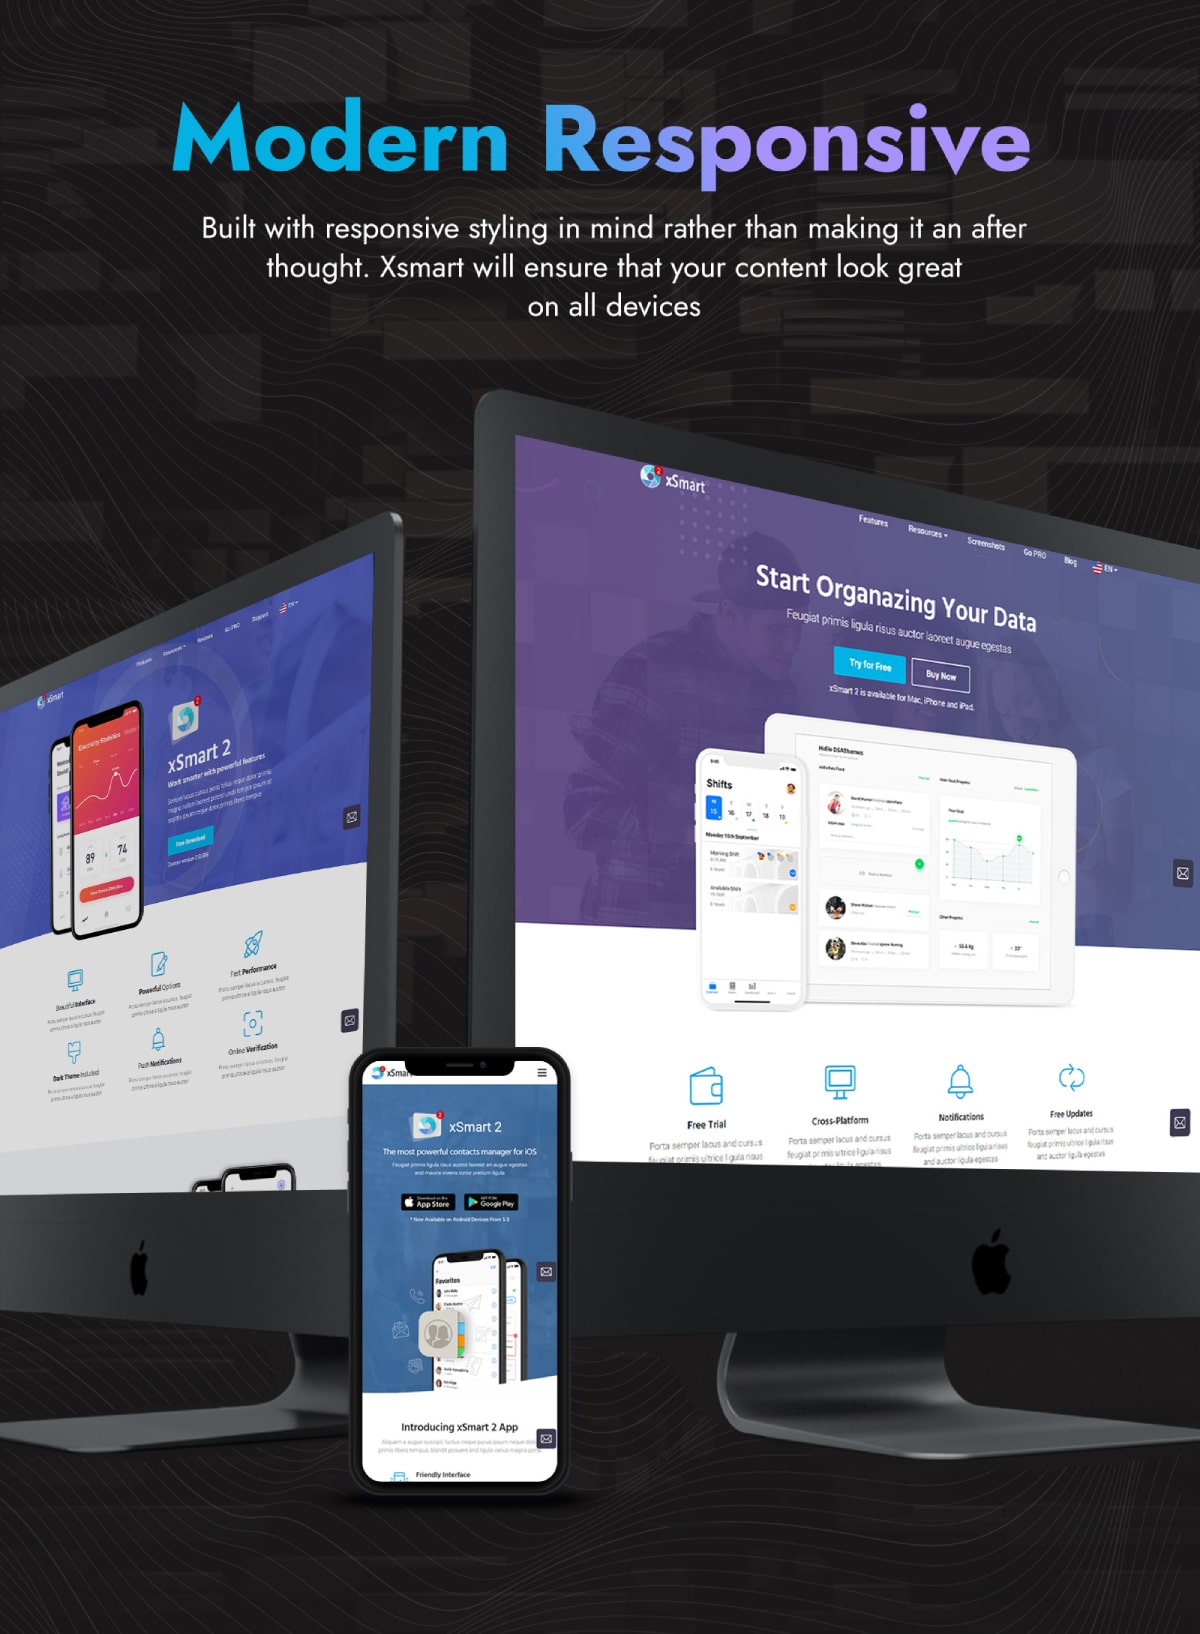 xSmart – App Landing Page WordPress Theme in Tech Presentation, Promo Marketing & Advertising Agency